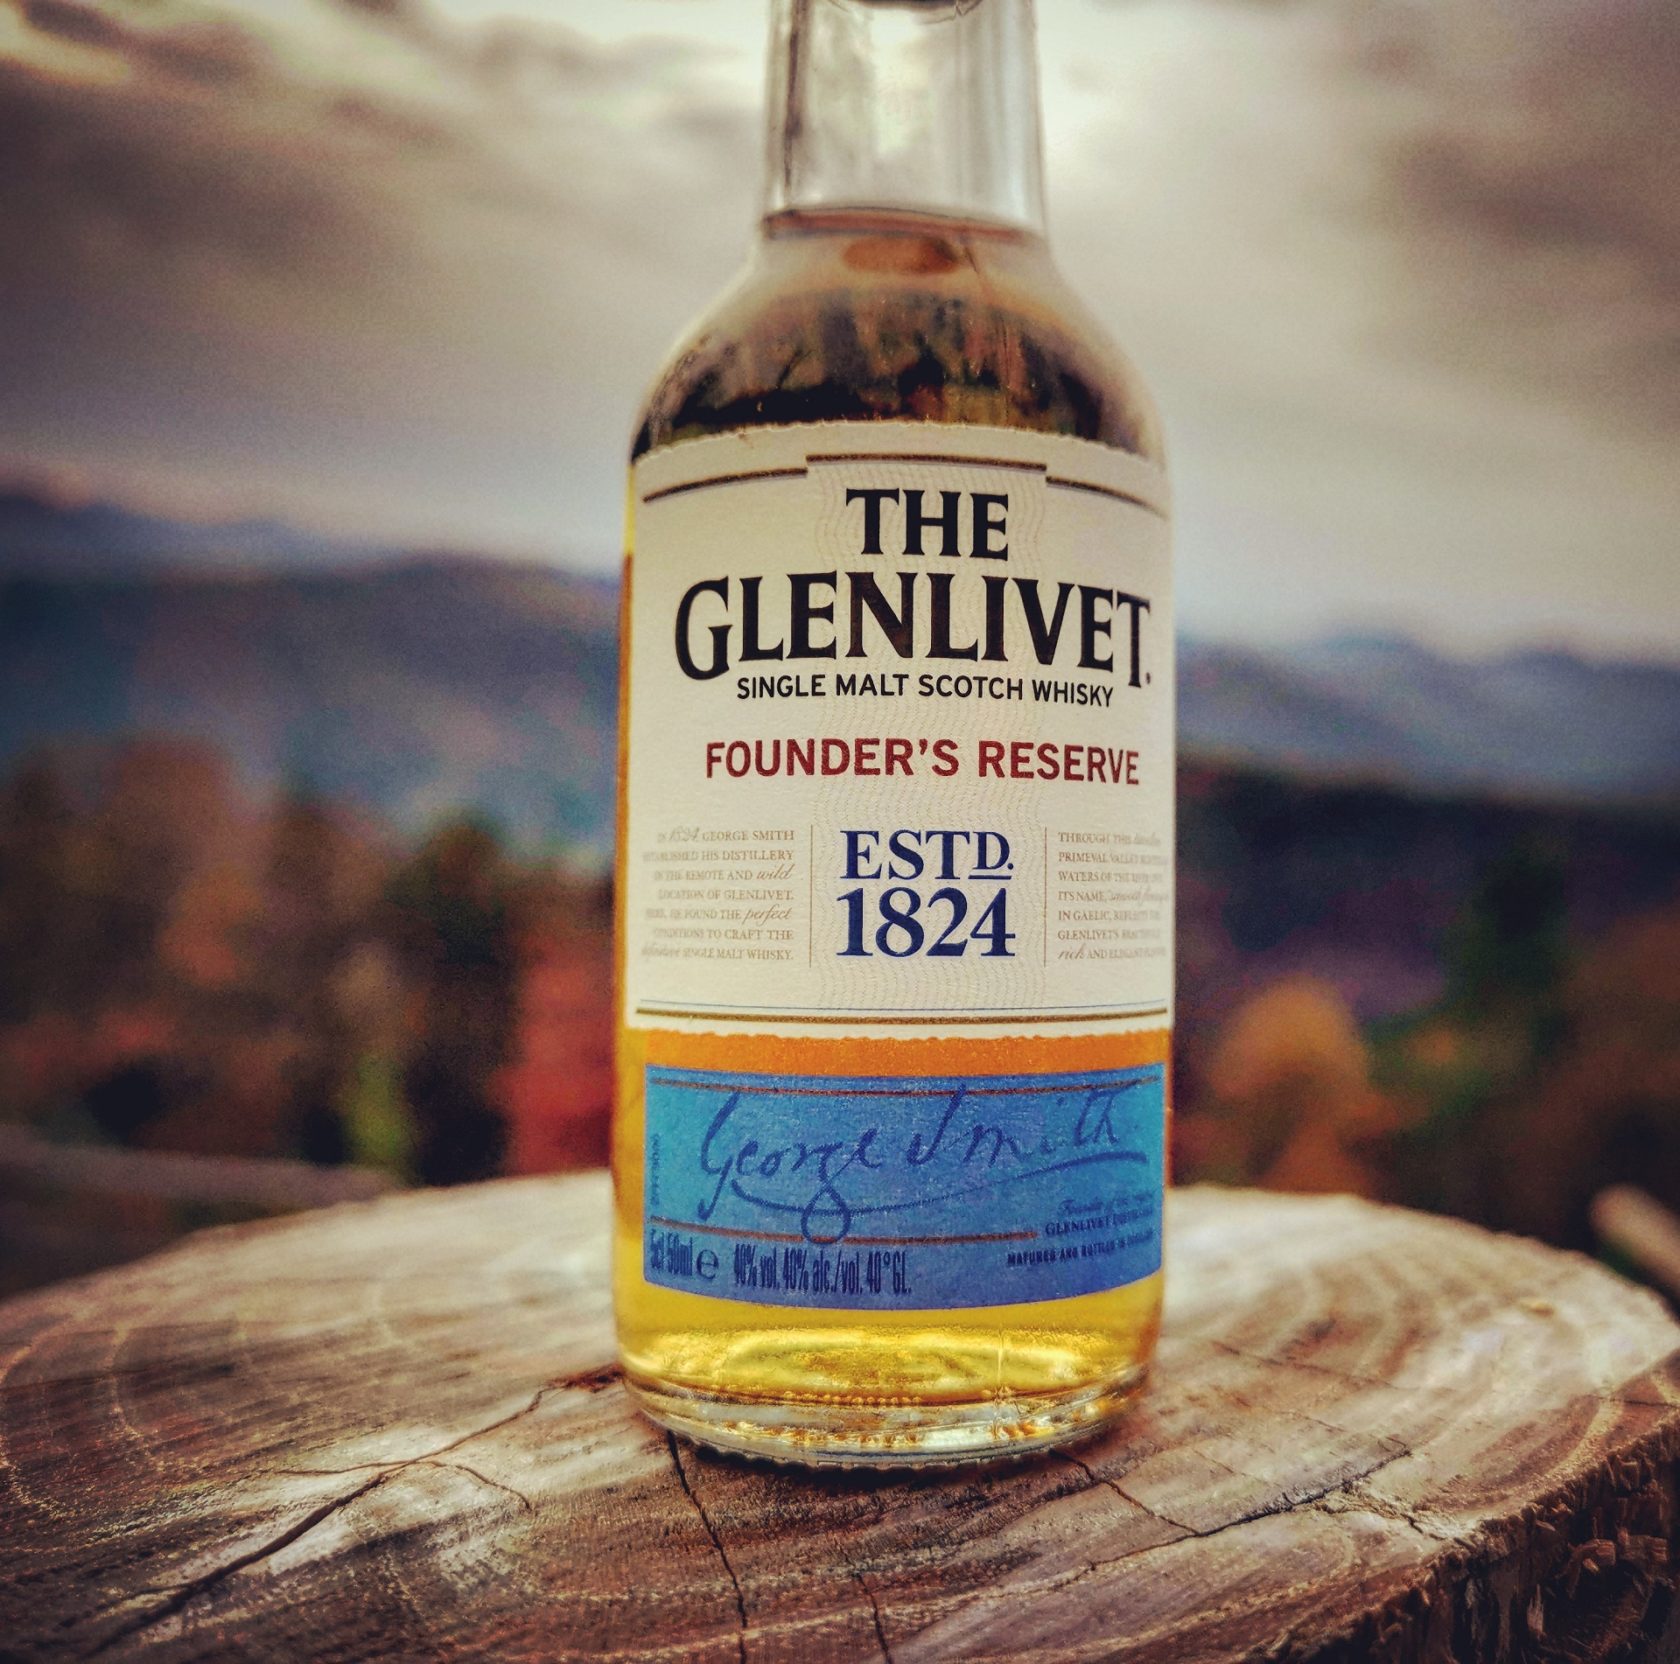 The Glenlivet Founder's Reserve Speyside Single Malt Scotch Whisky